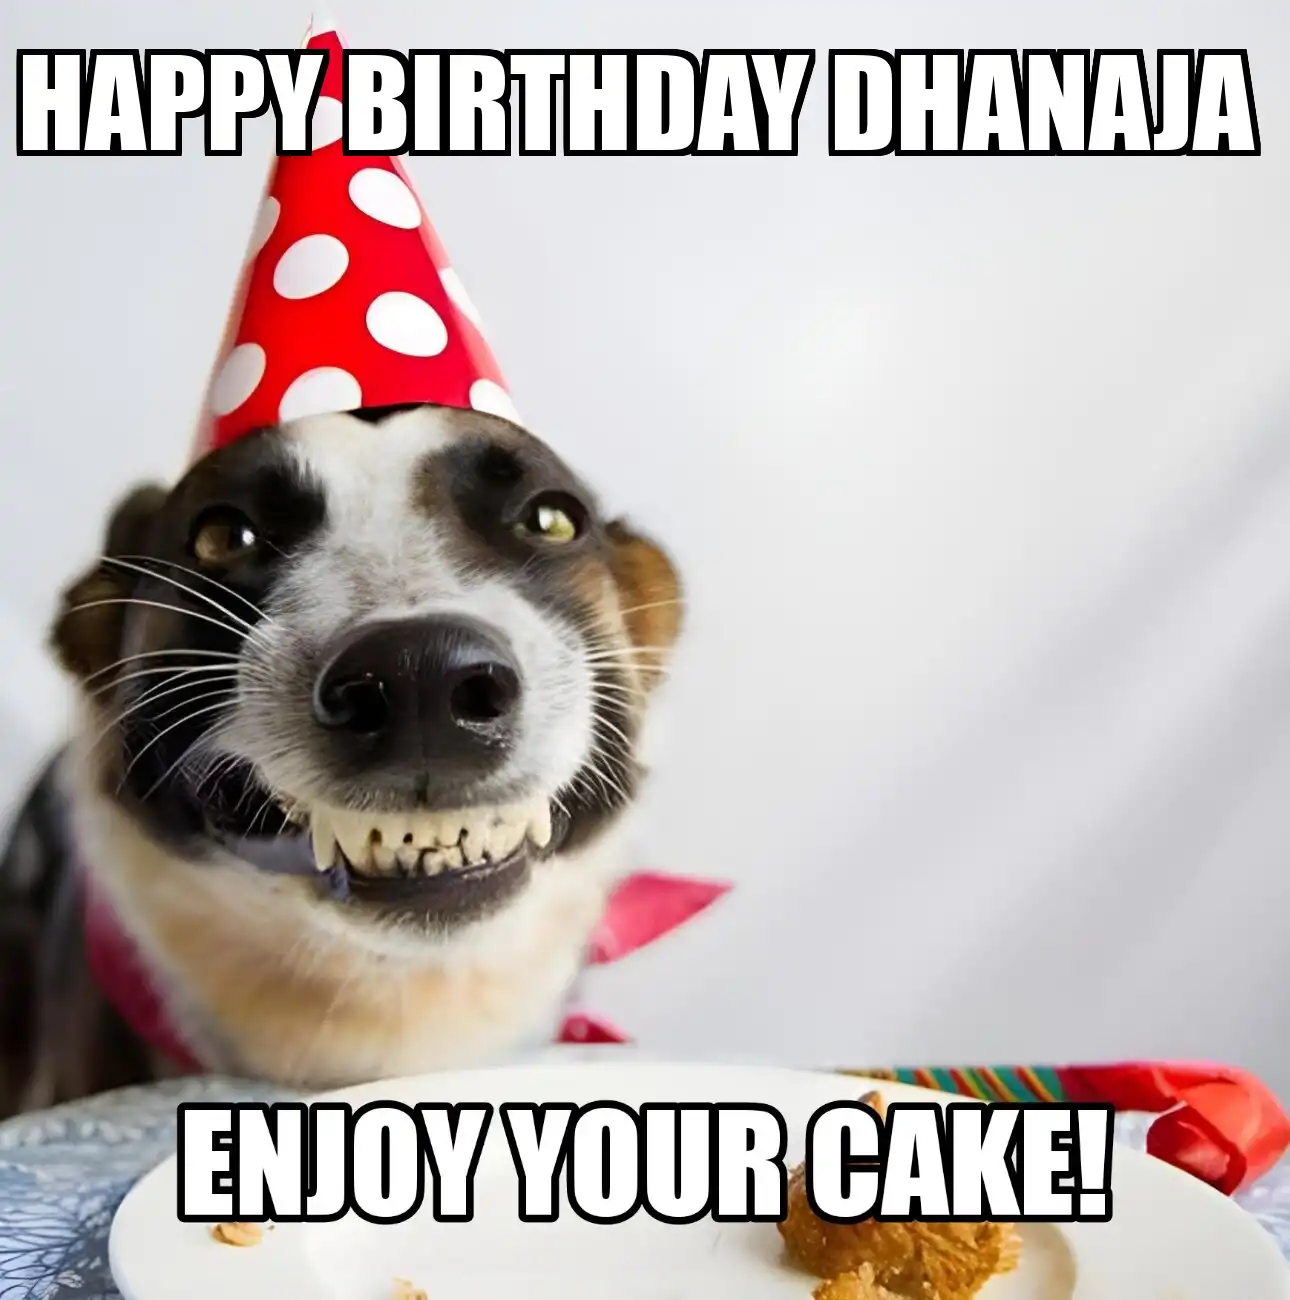 Happy Birthday Dhanaja Enjoy Your Cake Dog Meme